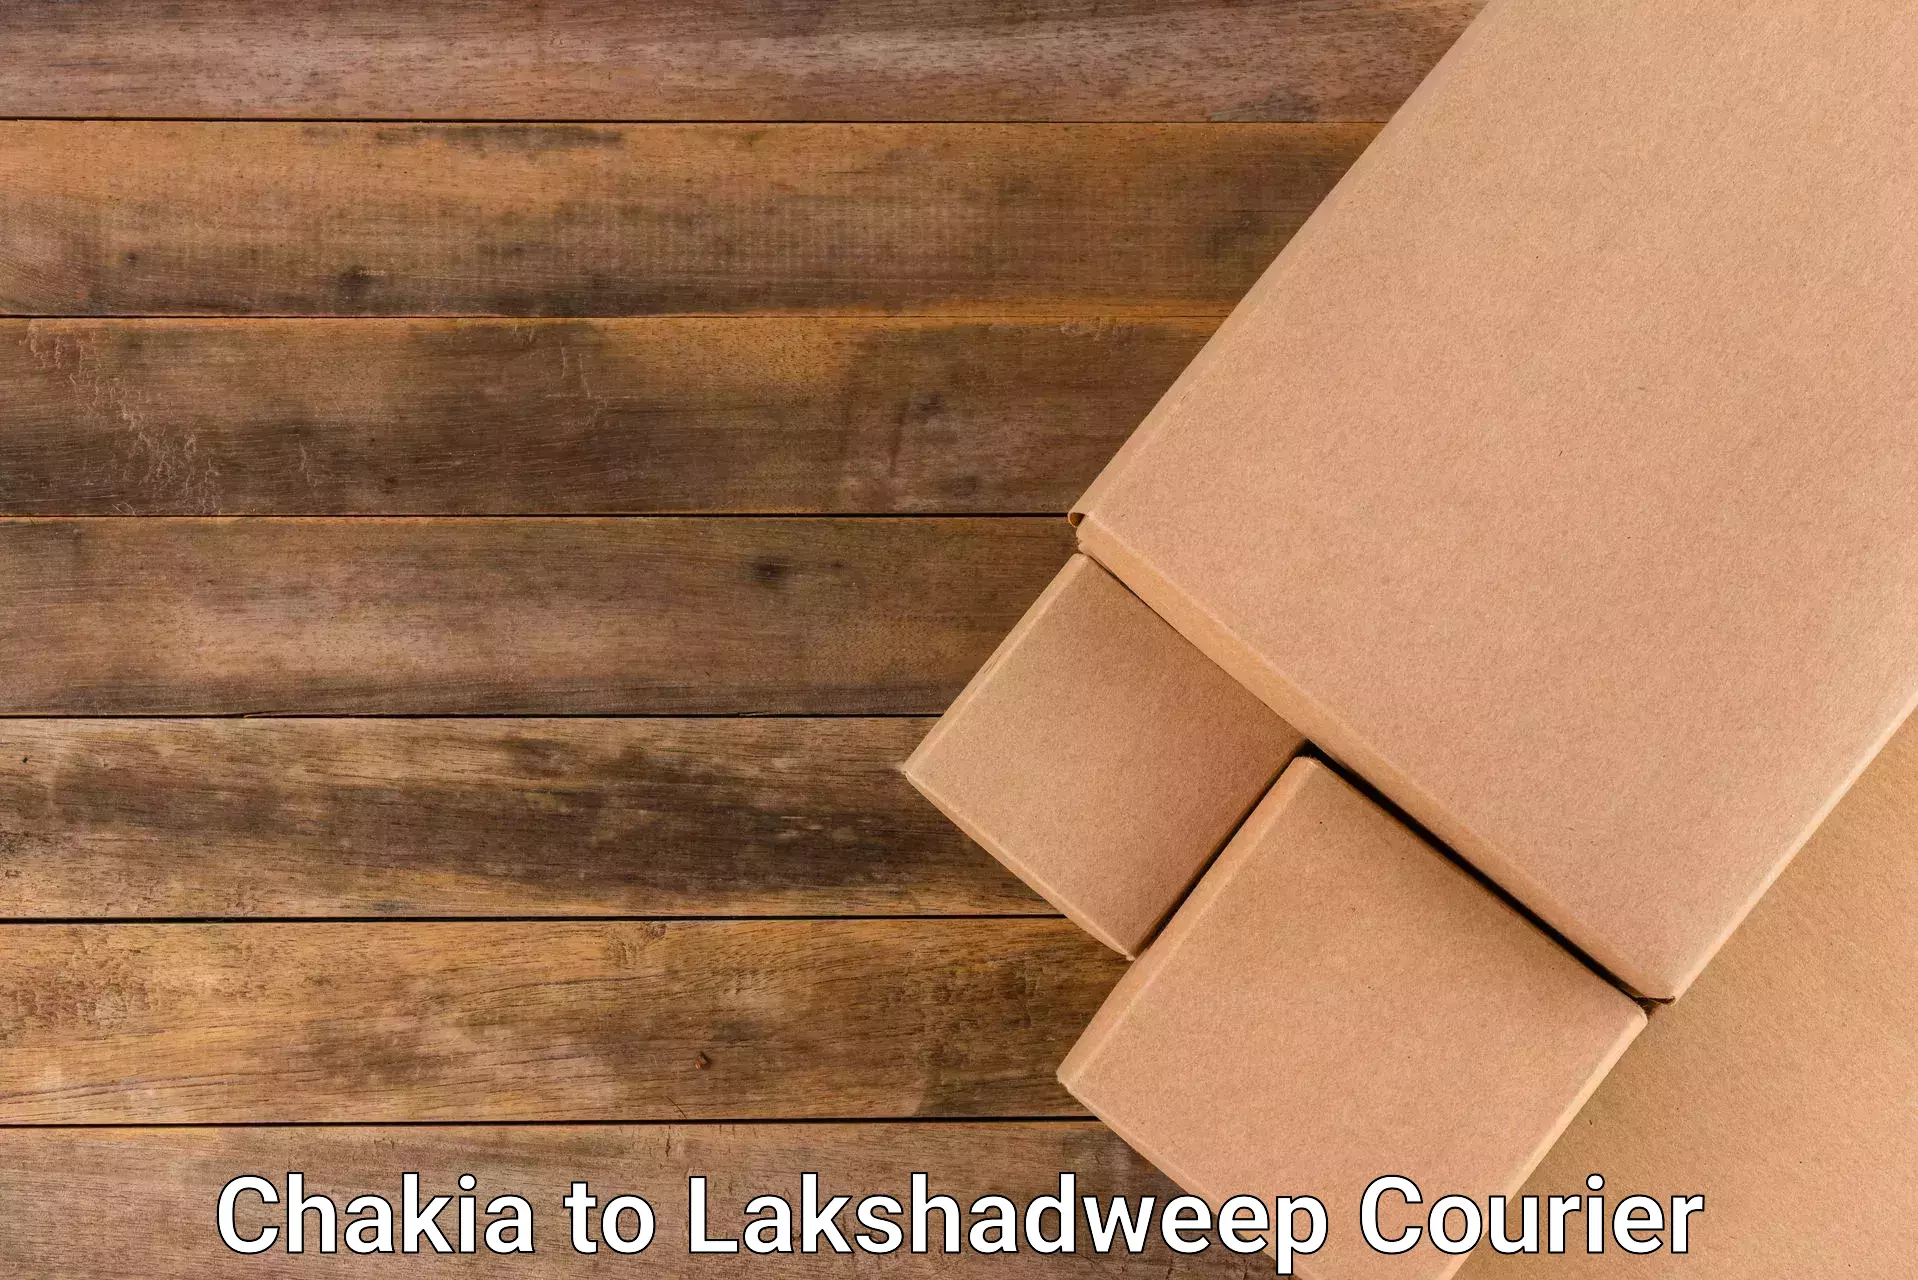 Efficient cargo handling Chakia to Lakshadweep